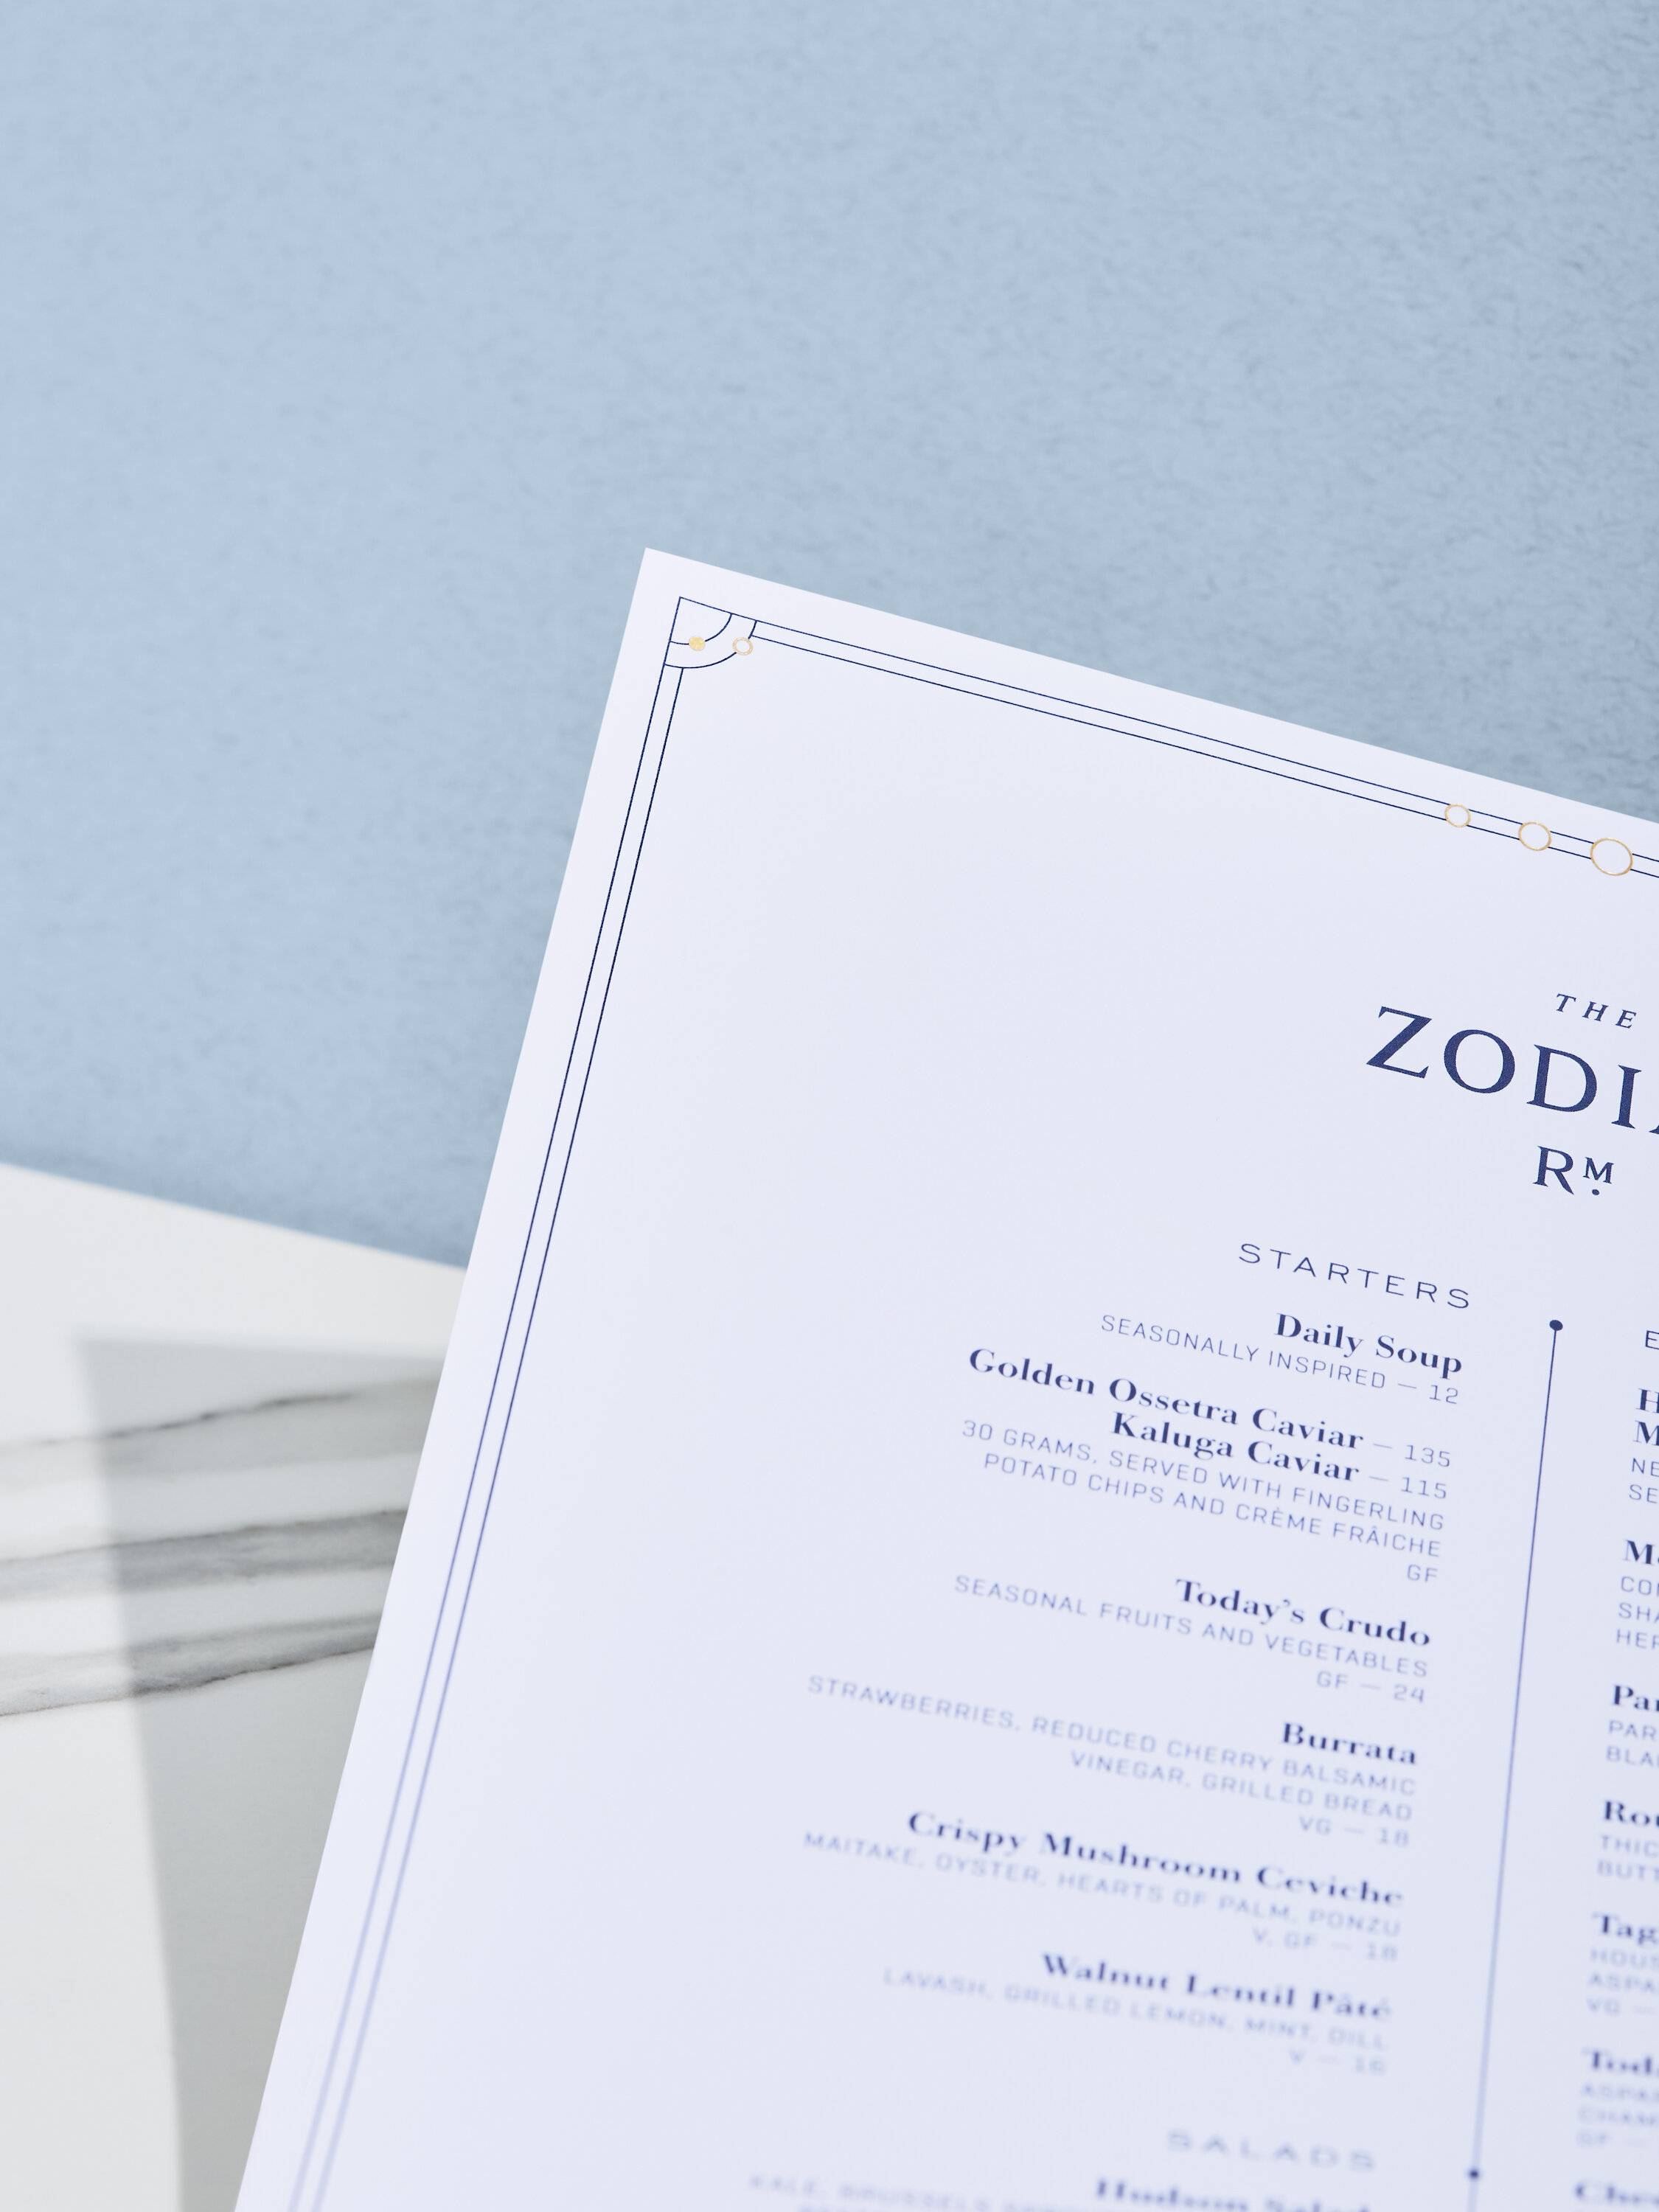 Zodiac Room - Brand Bureau